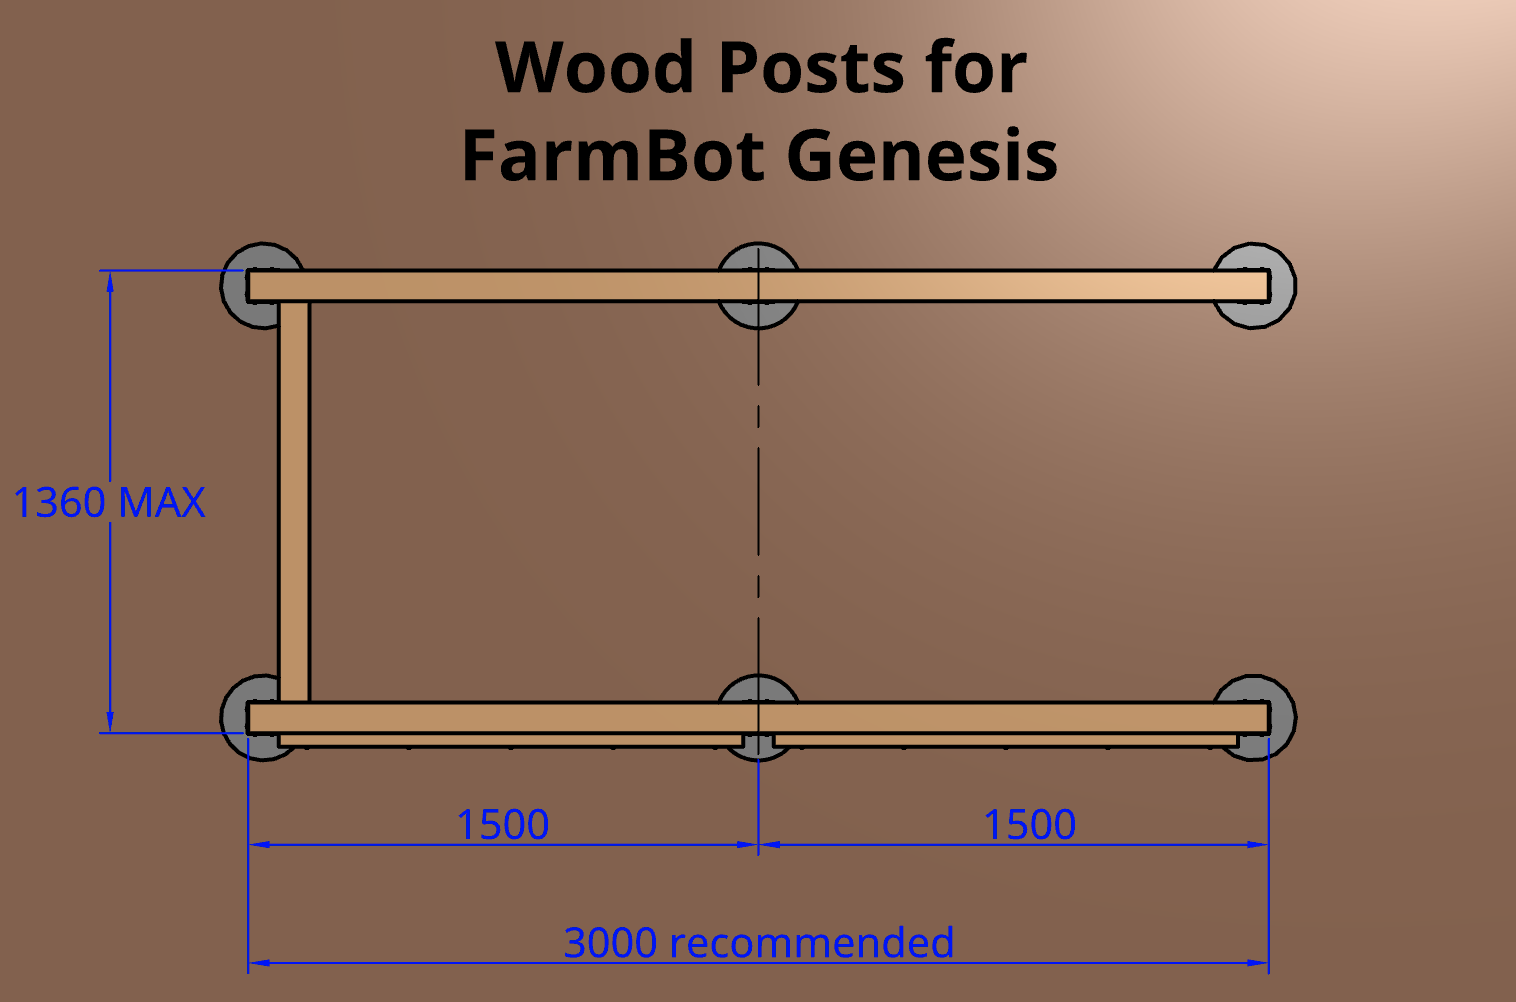 FarmBot Genesis wood post hole layout